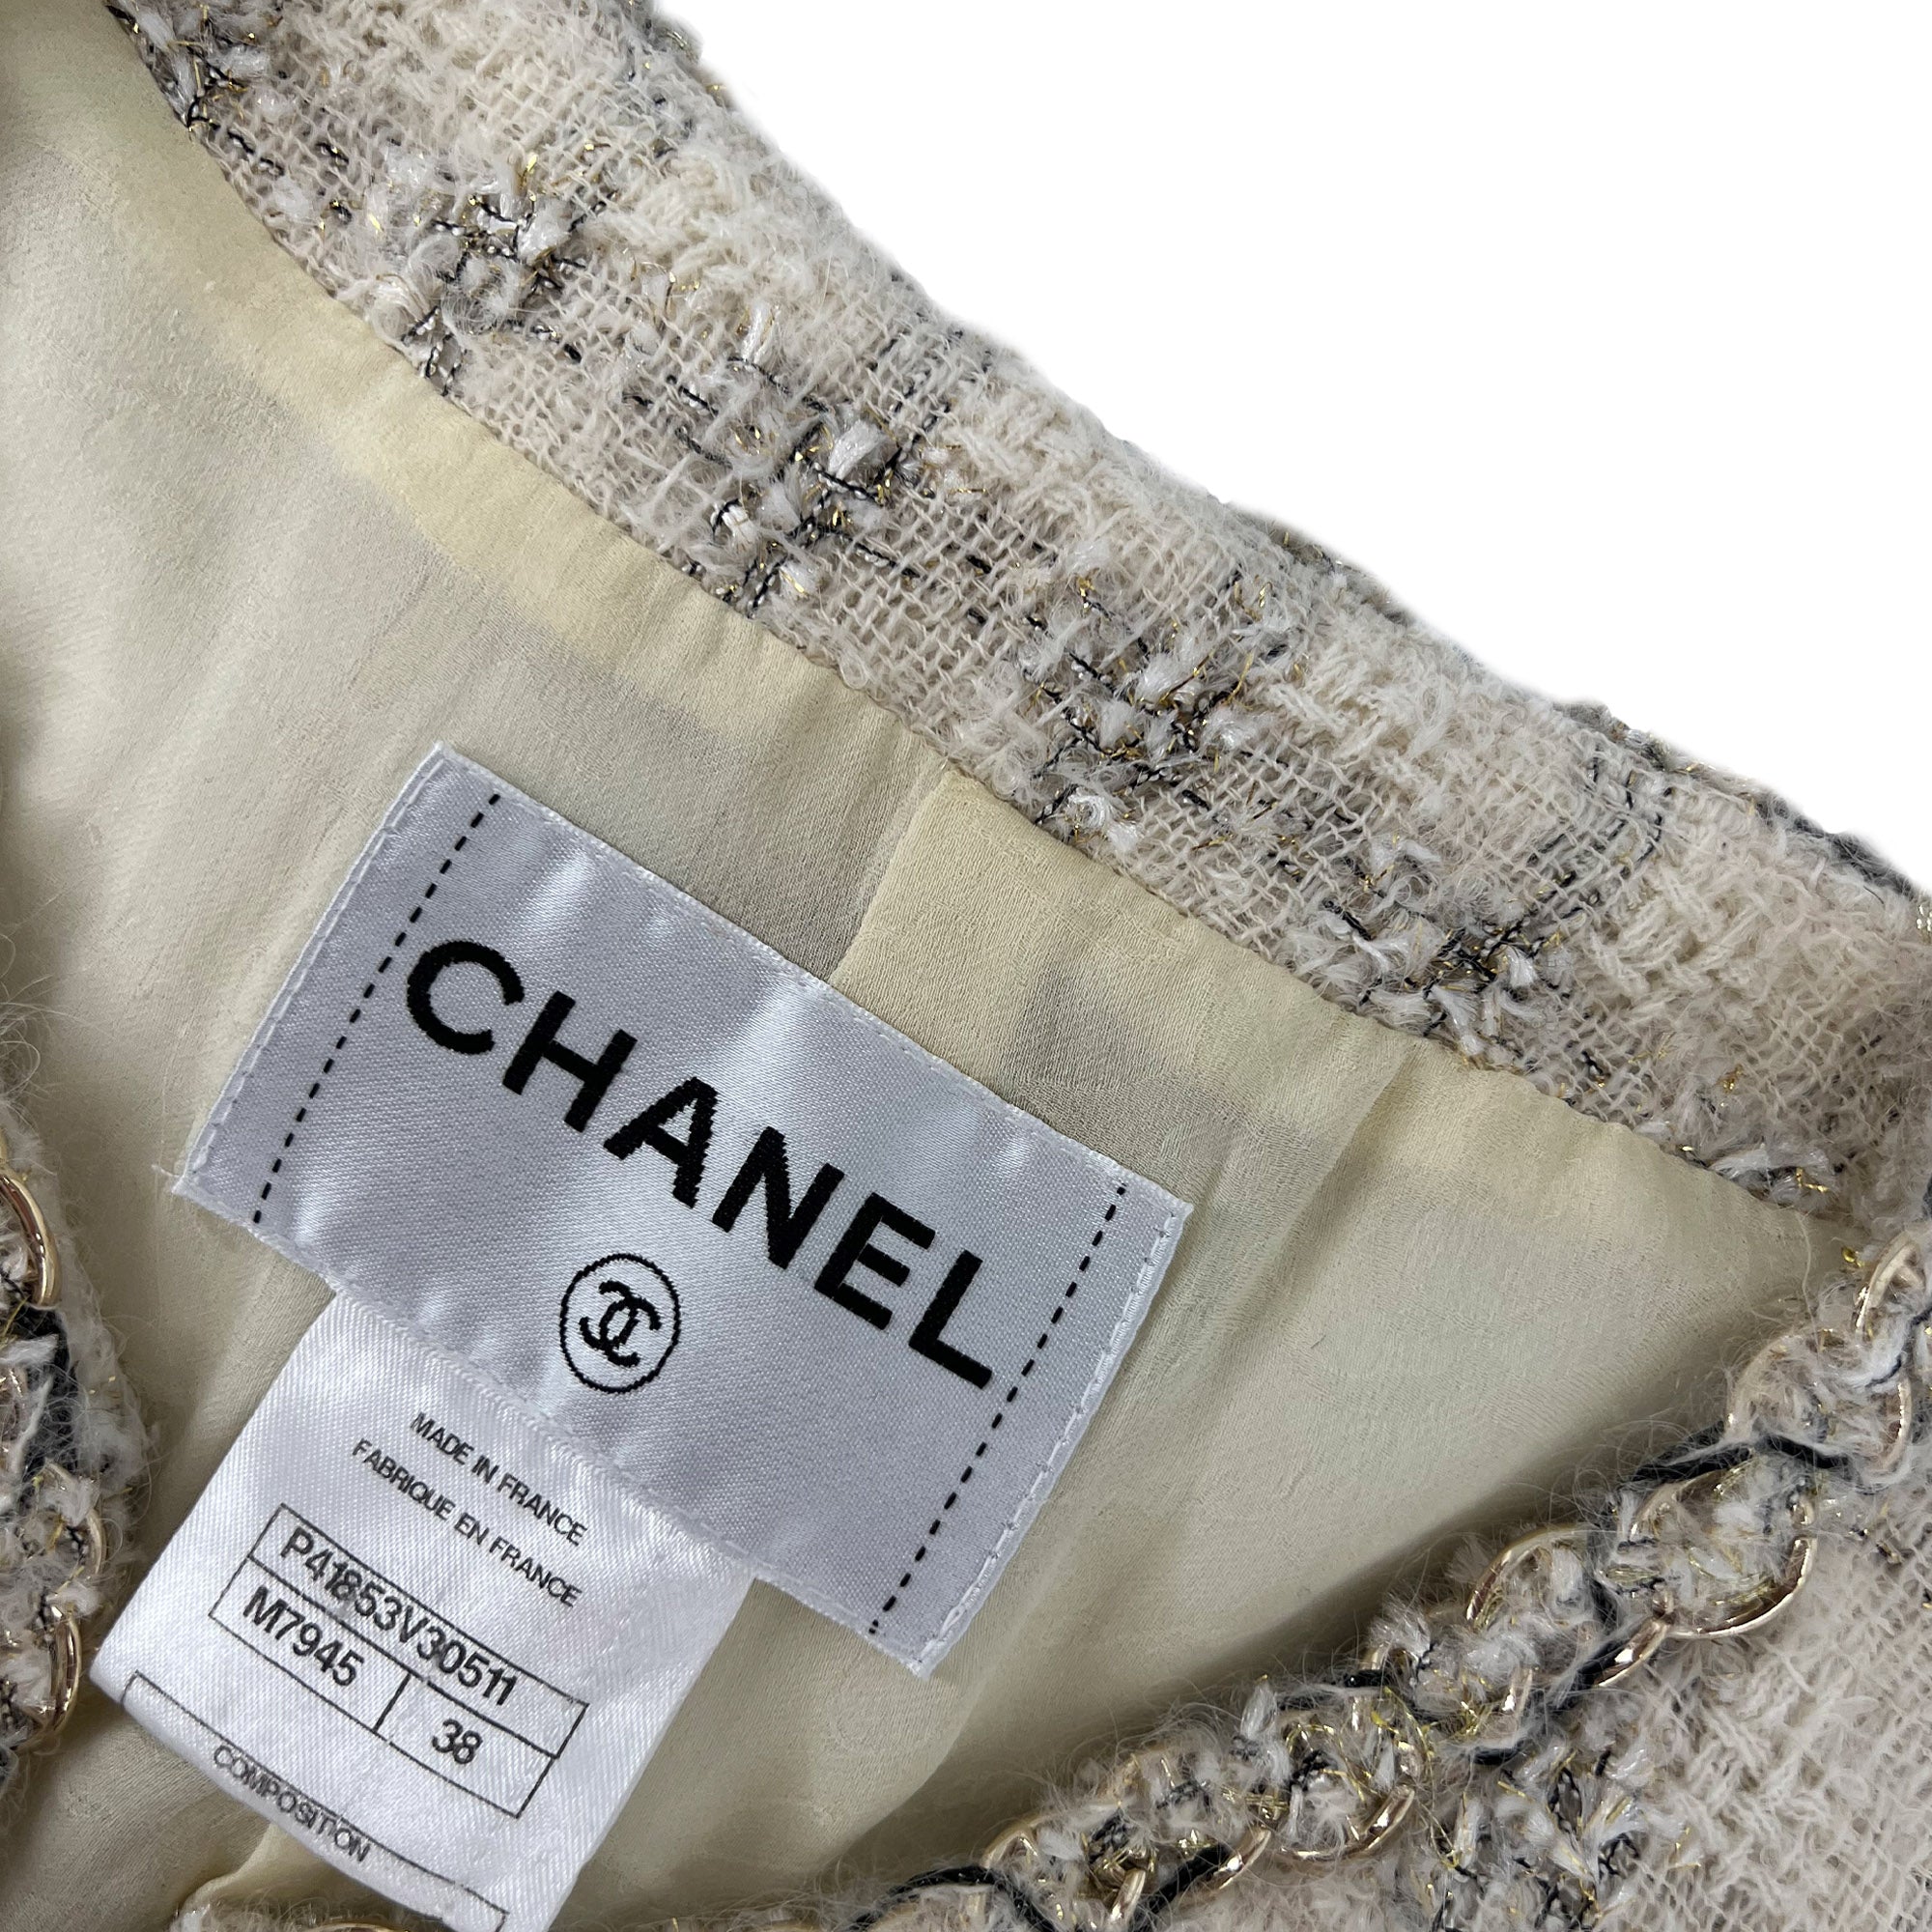 Vintage Chanel Boucle Tweed Jacket